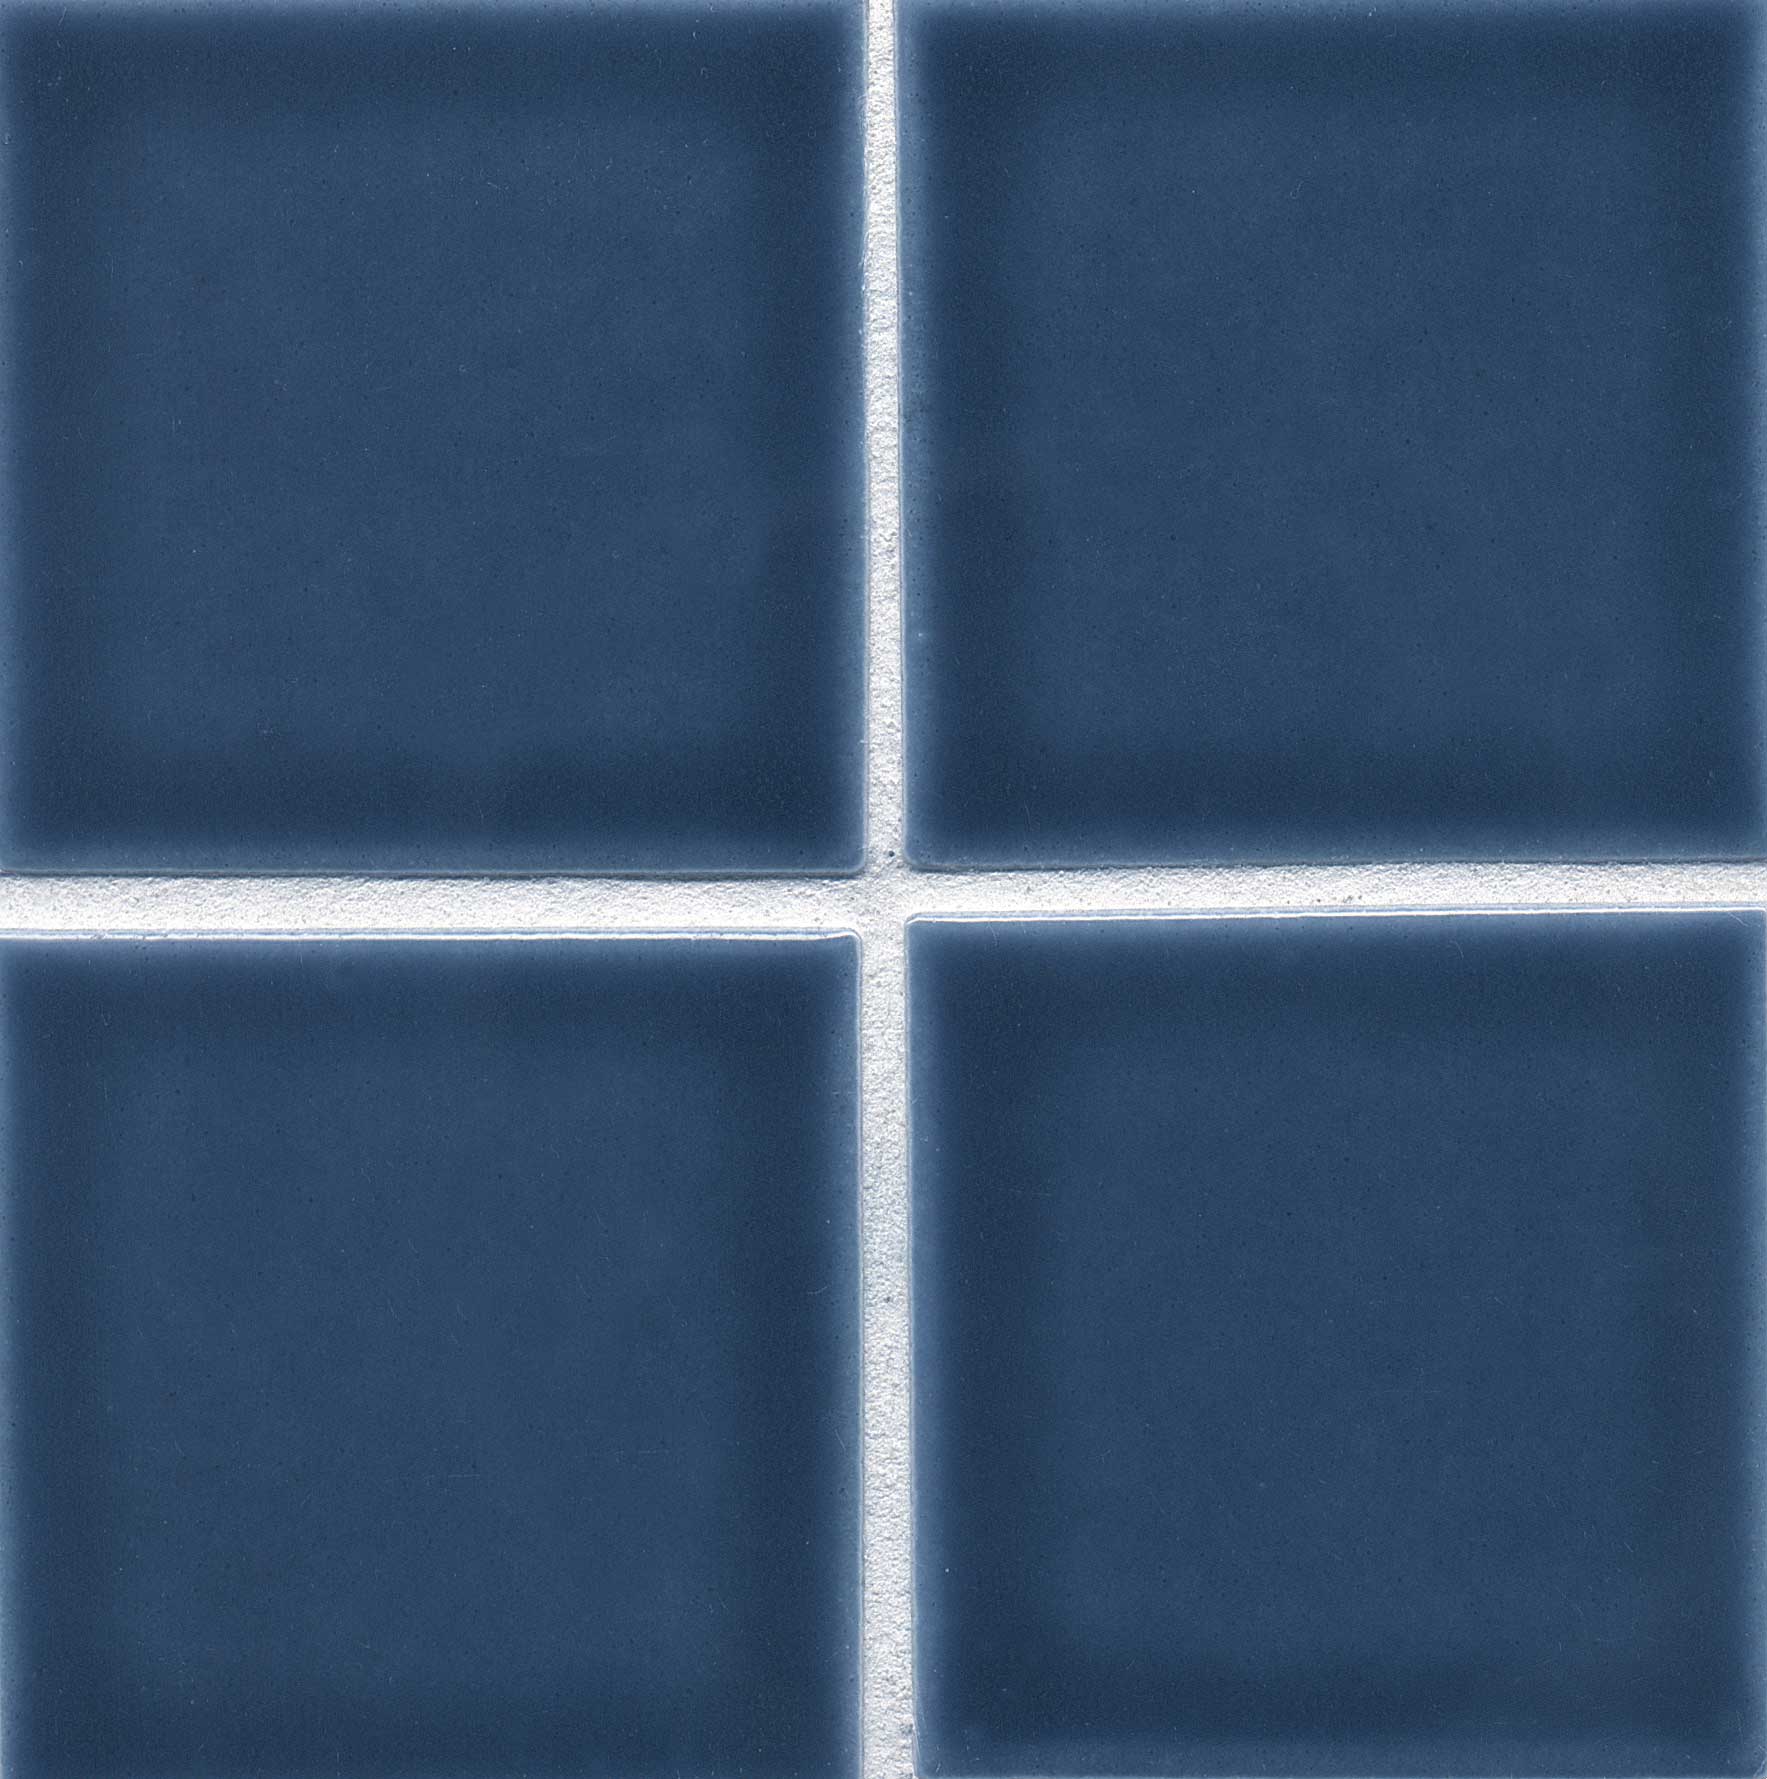 Hm 340 Navy Blue Universal Pool Tile, Navy Blue Tile